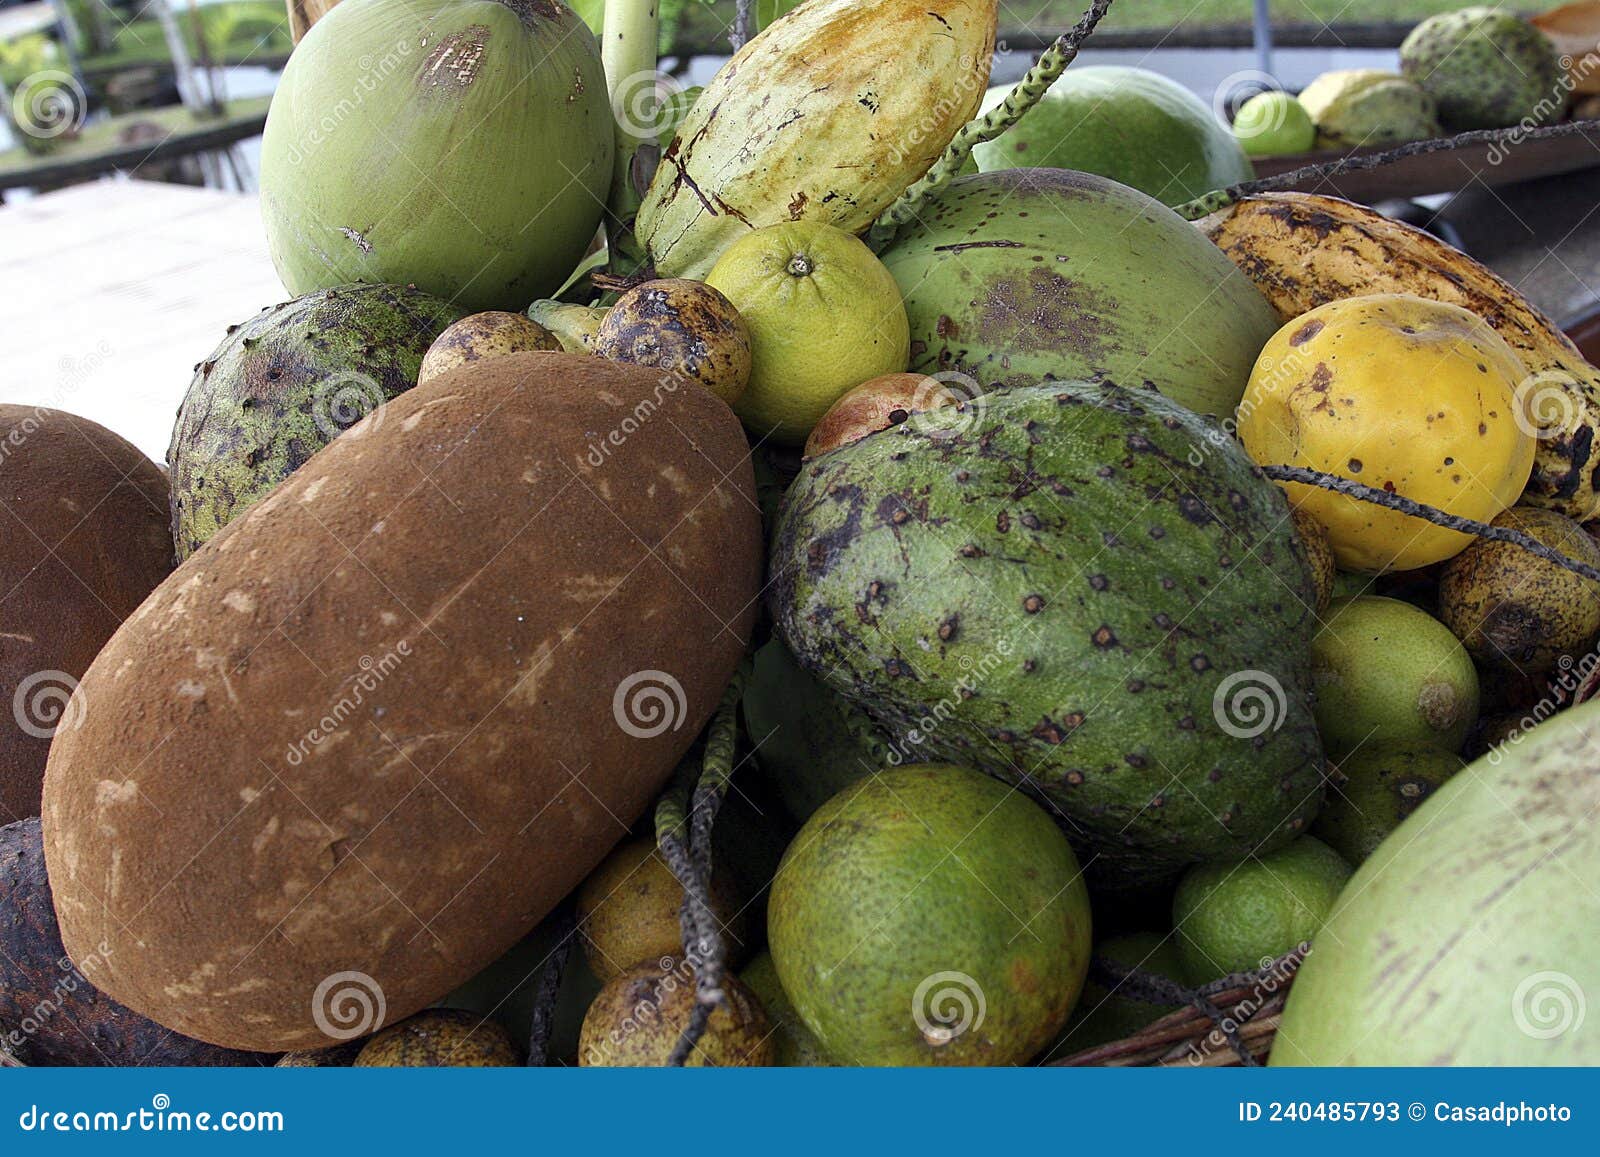 Fruits Basket Brazil